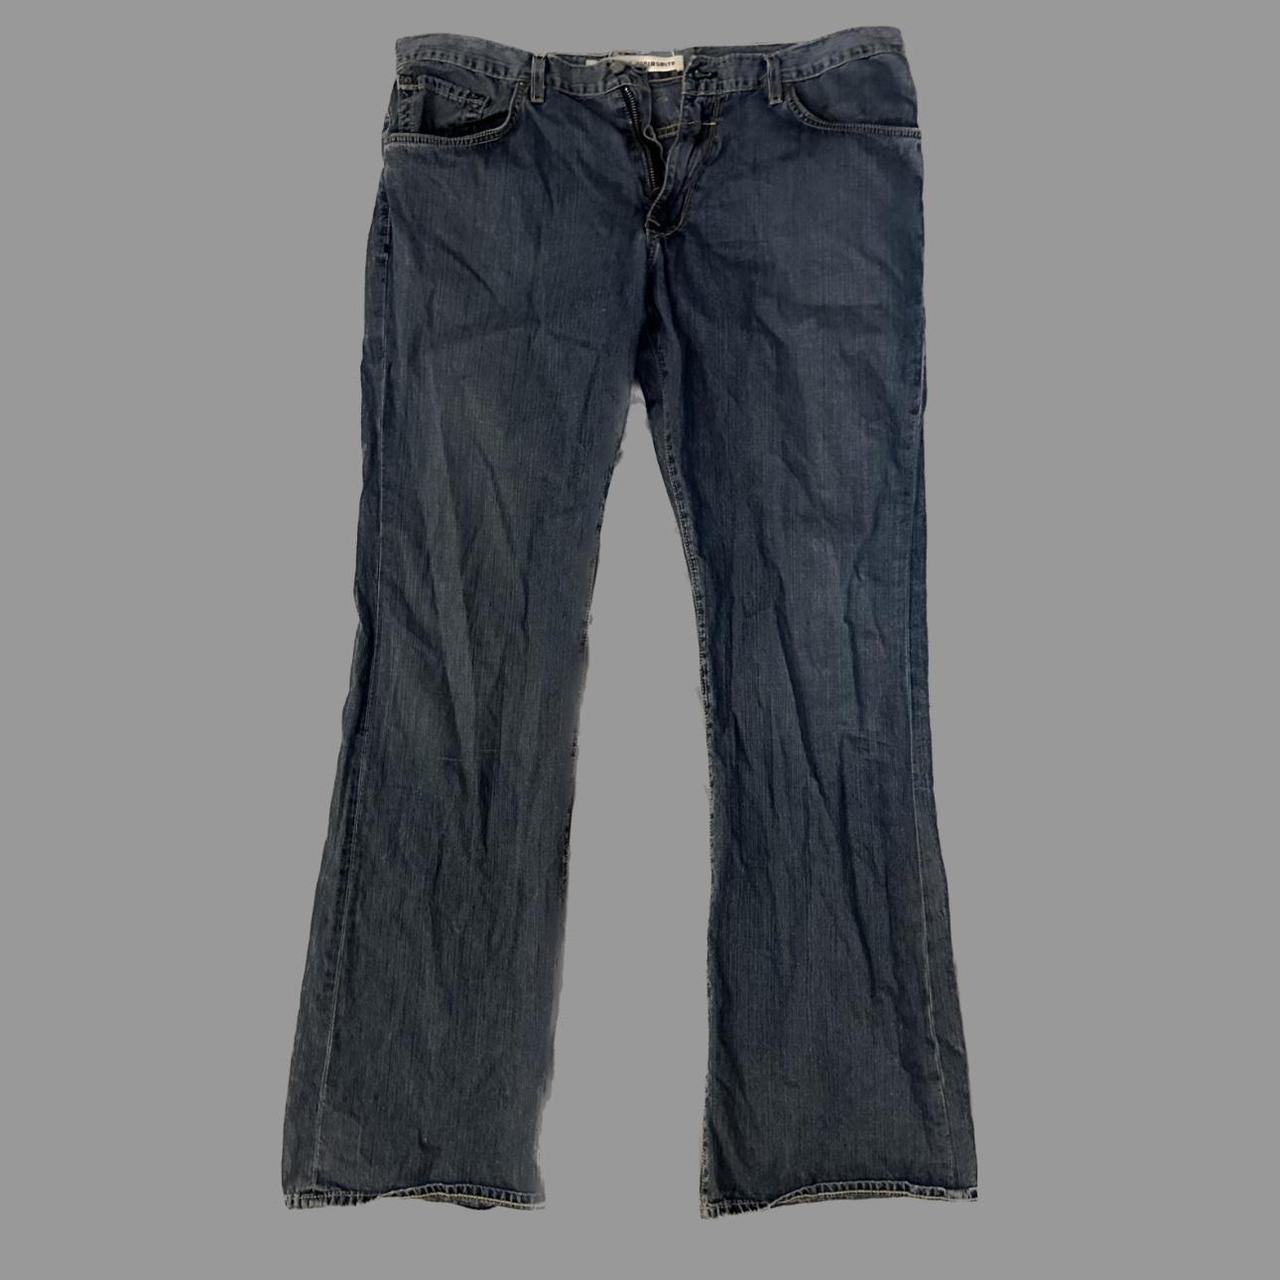 Denimsmith Men's Blue and Navy Jeans